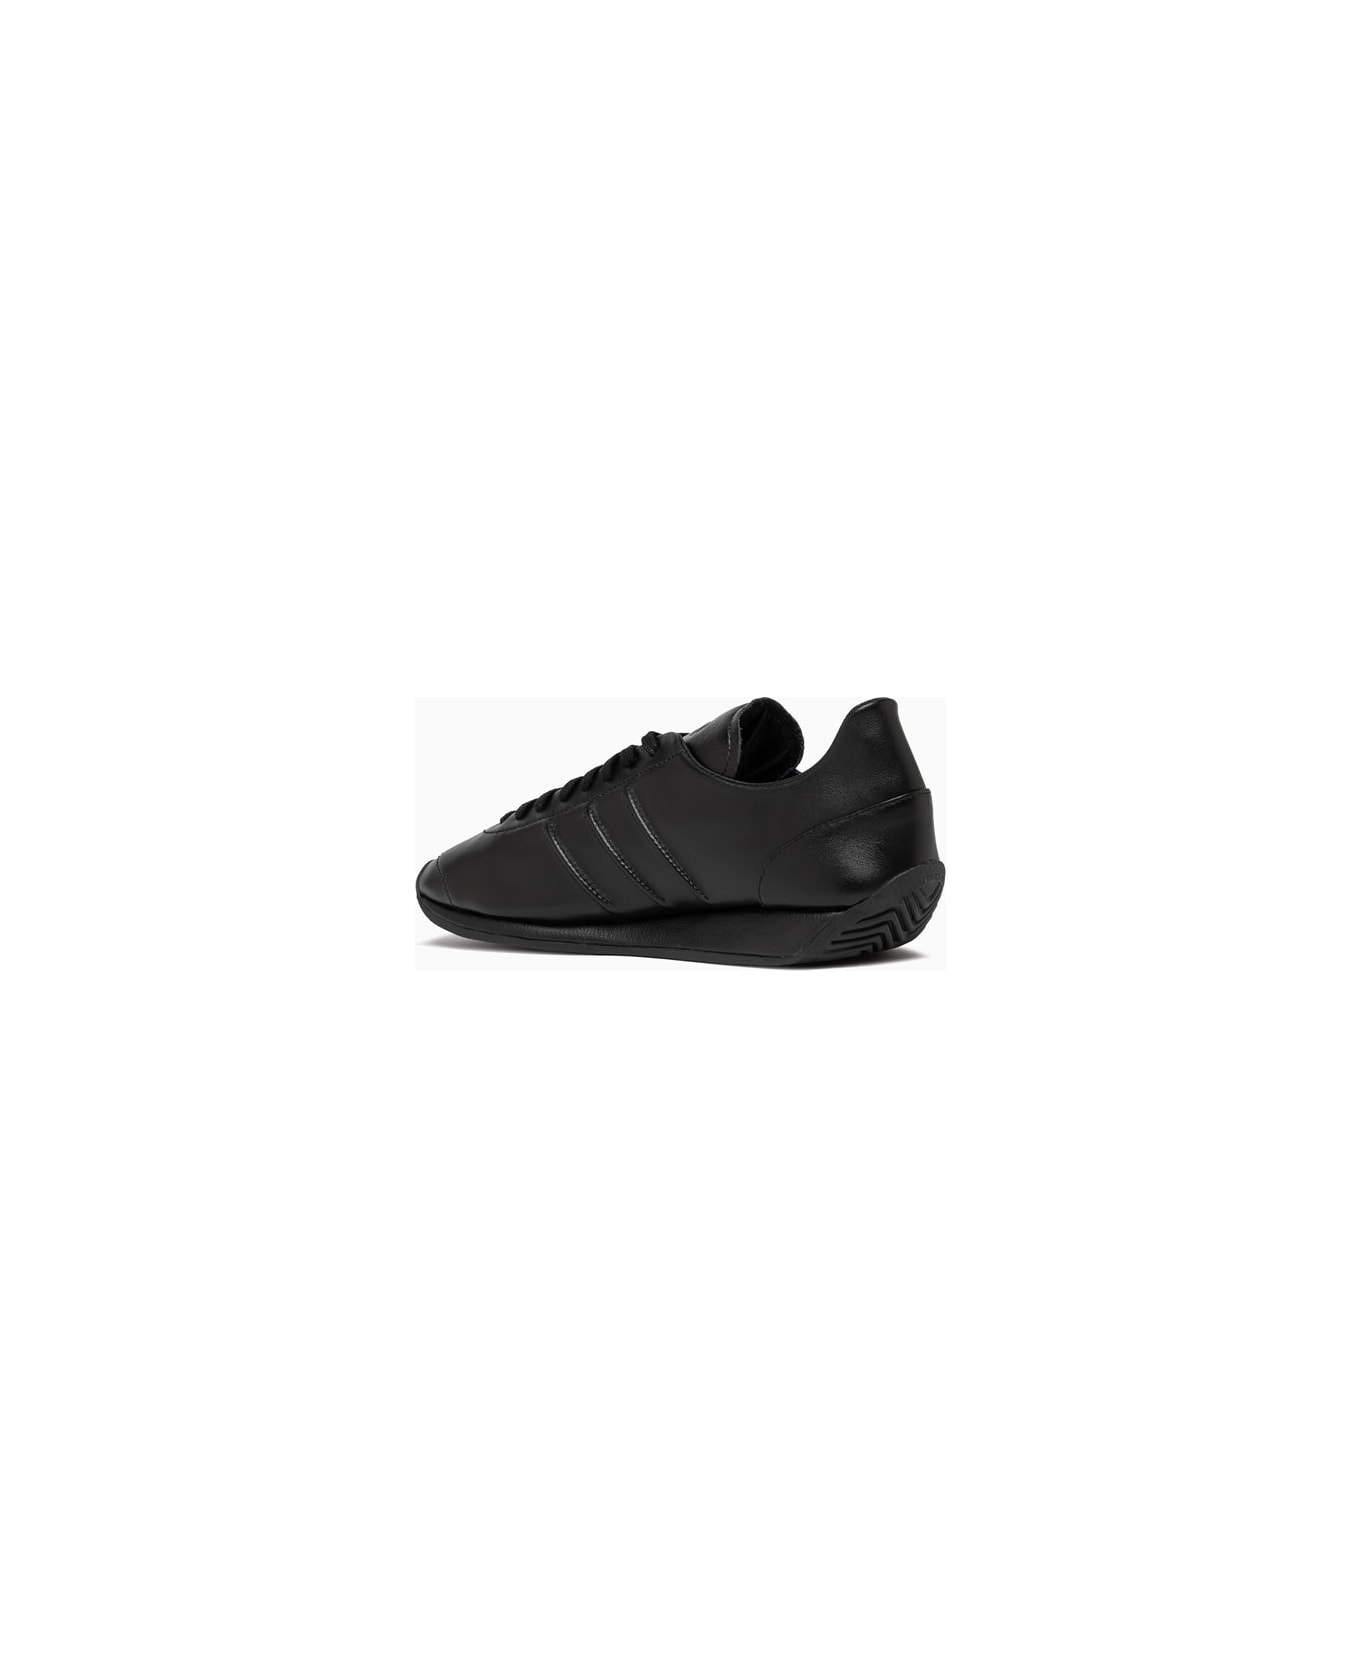 Y-3 Adidas Y-3 Country Sneakers Ie5697 - Black